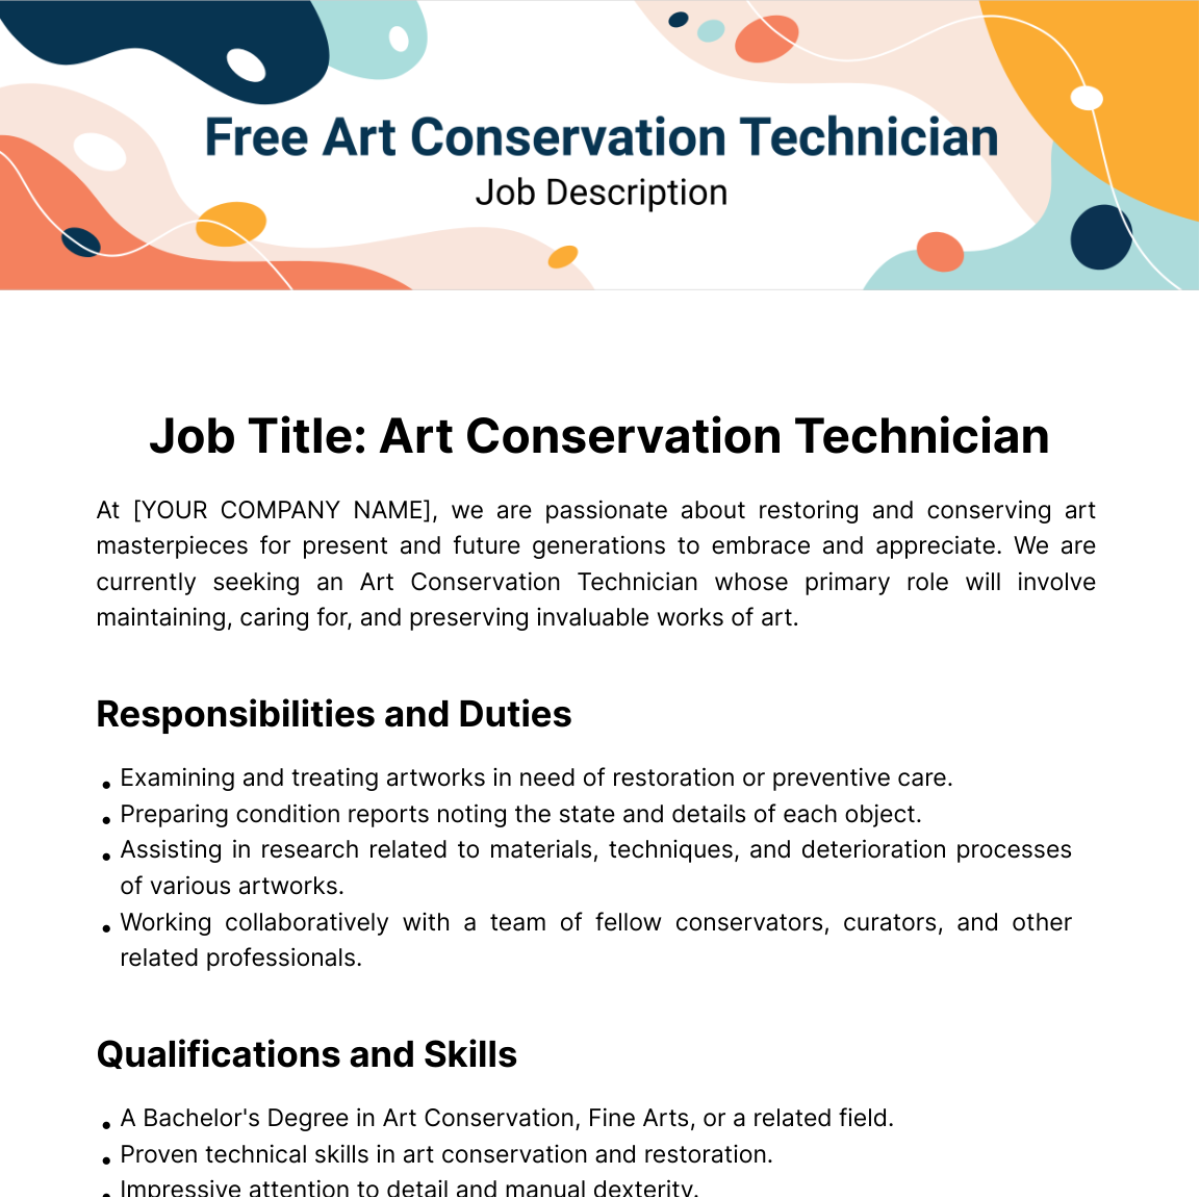 Free Art Conservation Technician Job Description Template